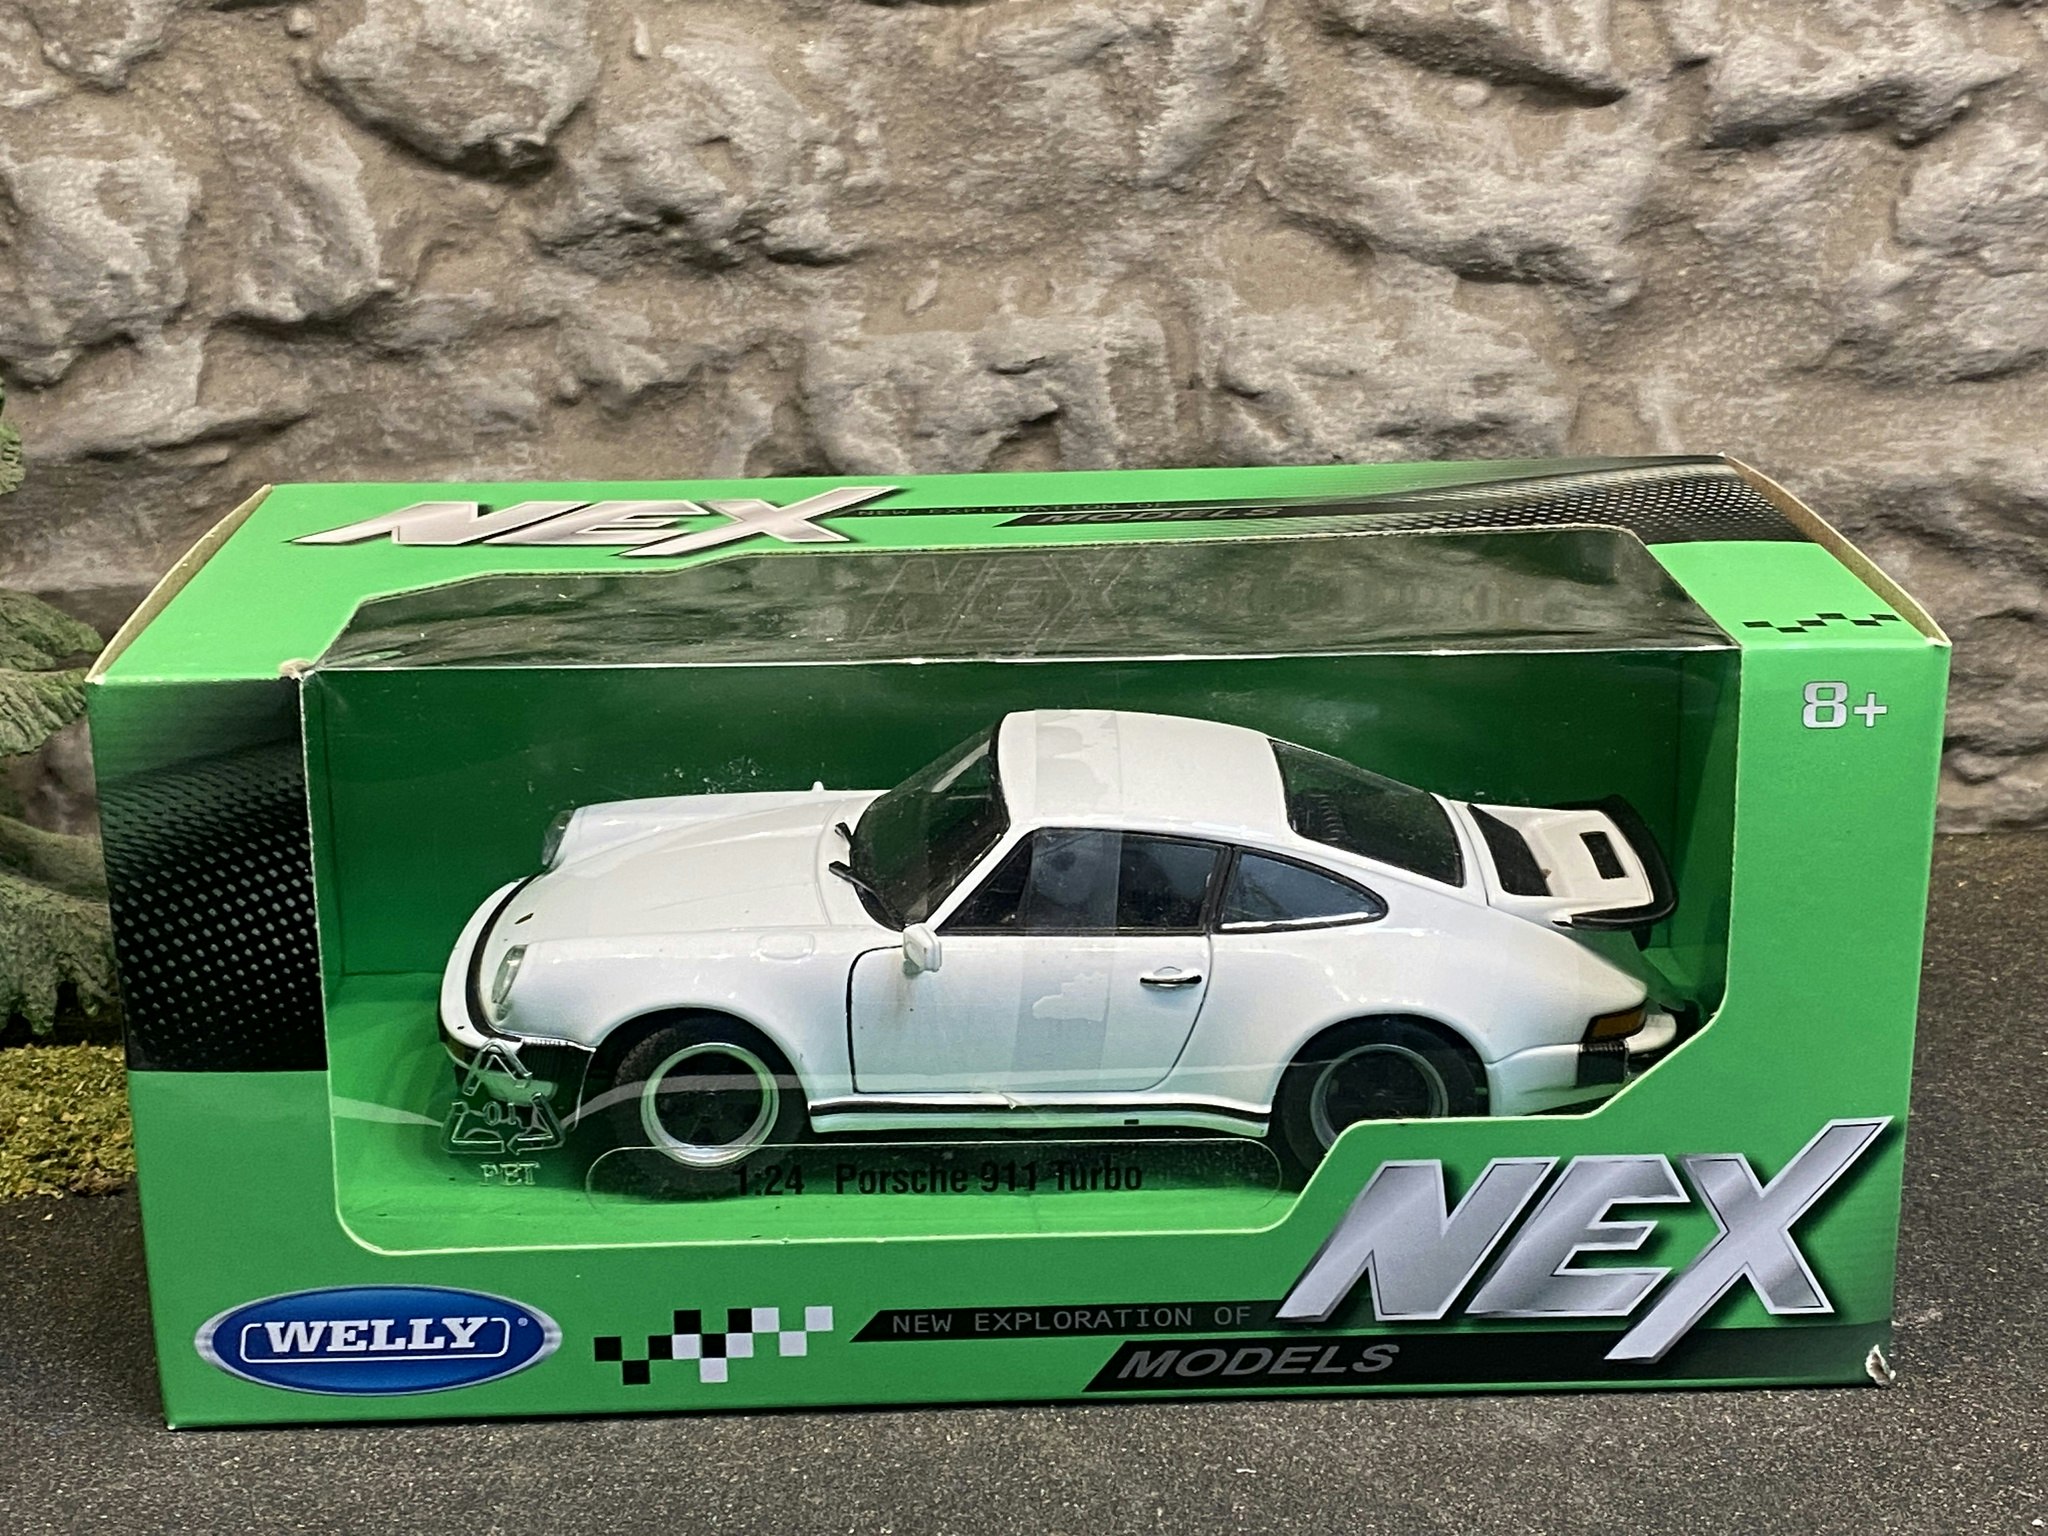 Skala 1/24 Porsche 911 Turbo, Vit från Nex models / Welly